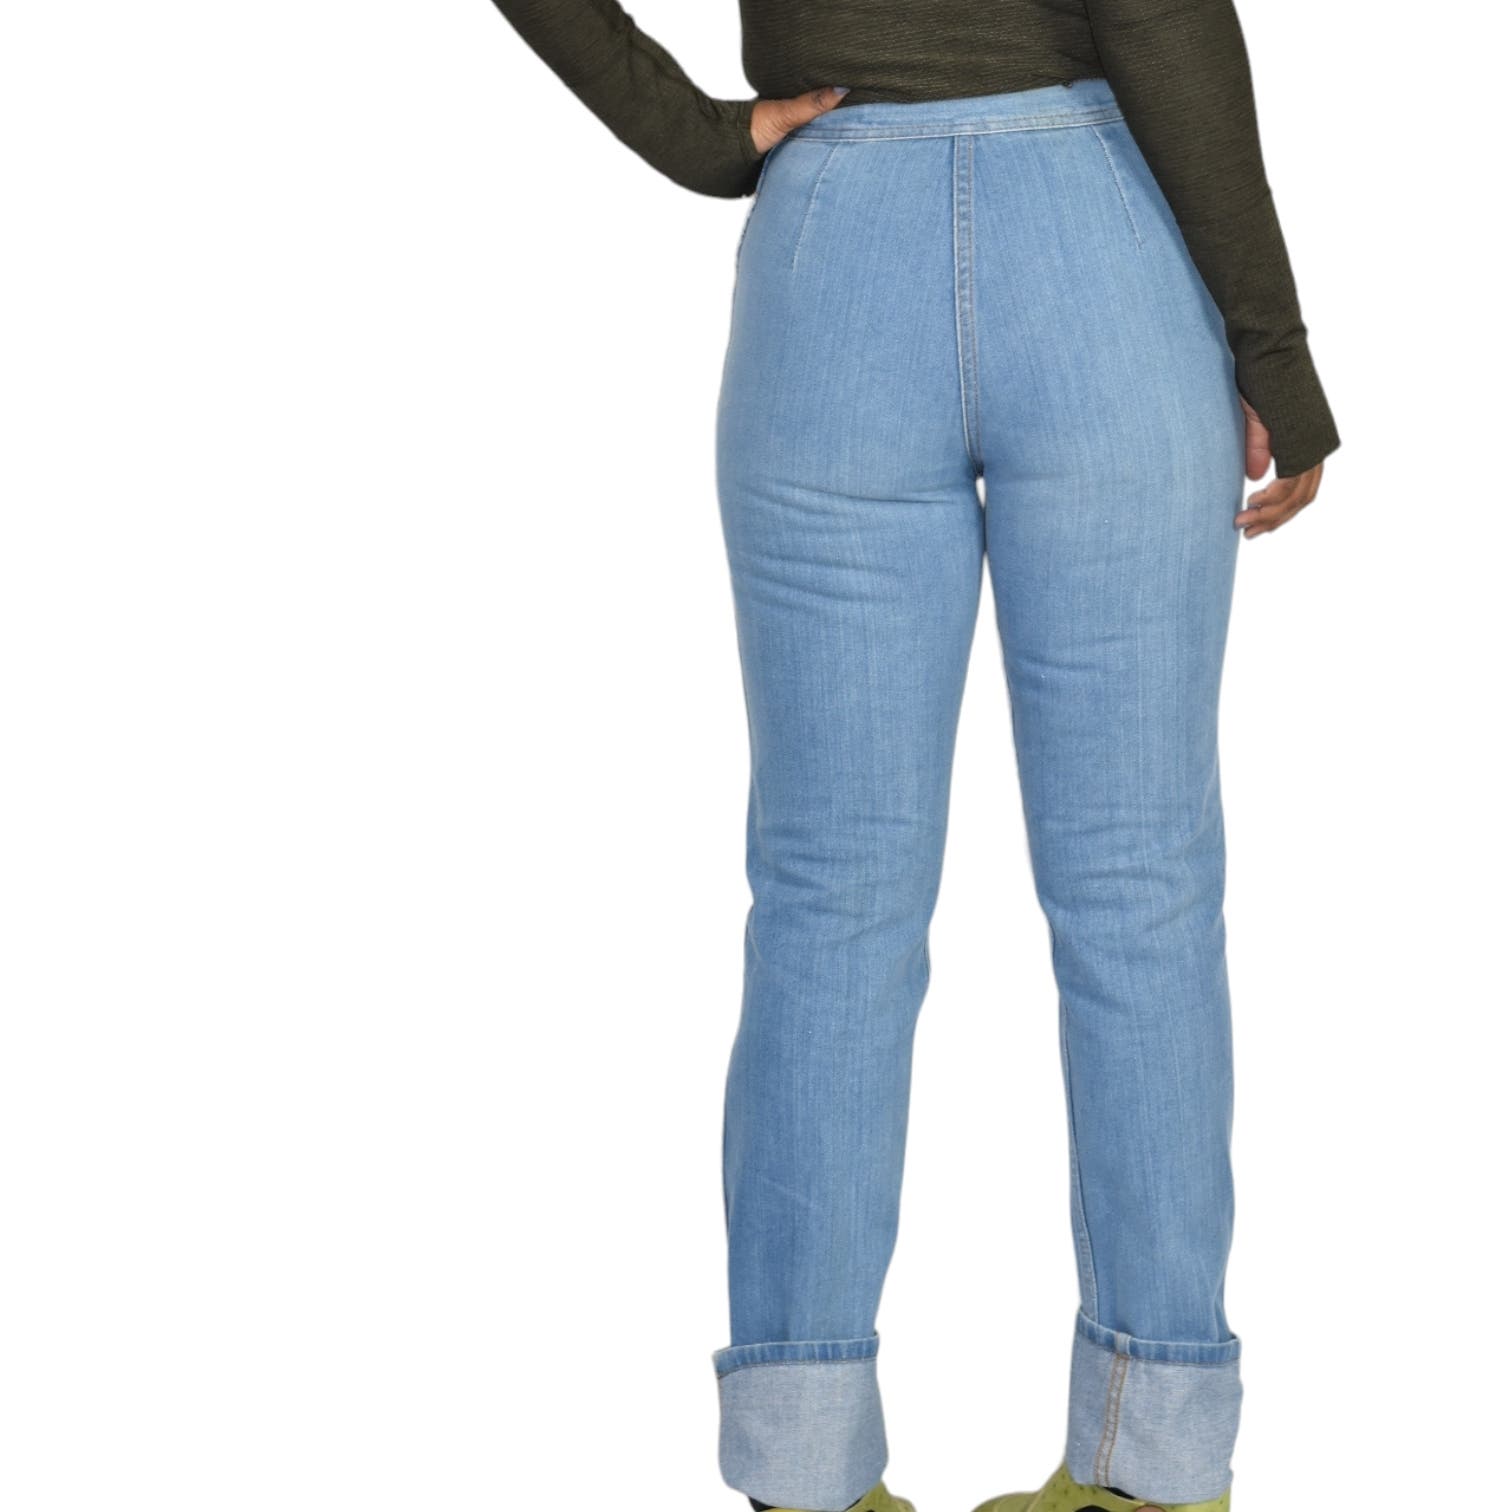 Vintage Renard Jeans Blue High Waist Straight Leg Bareback 80s French Cut Tight Size 25